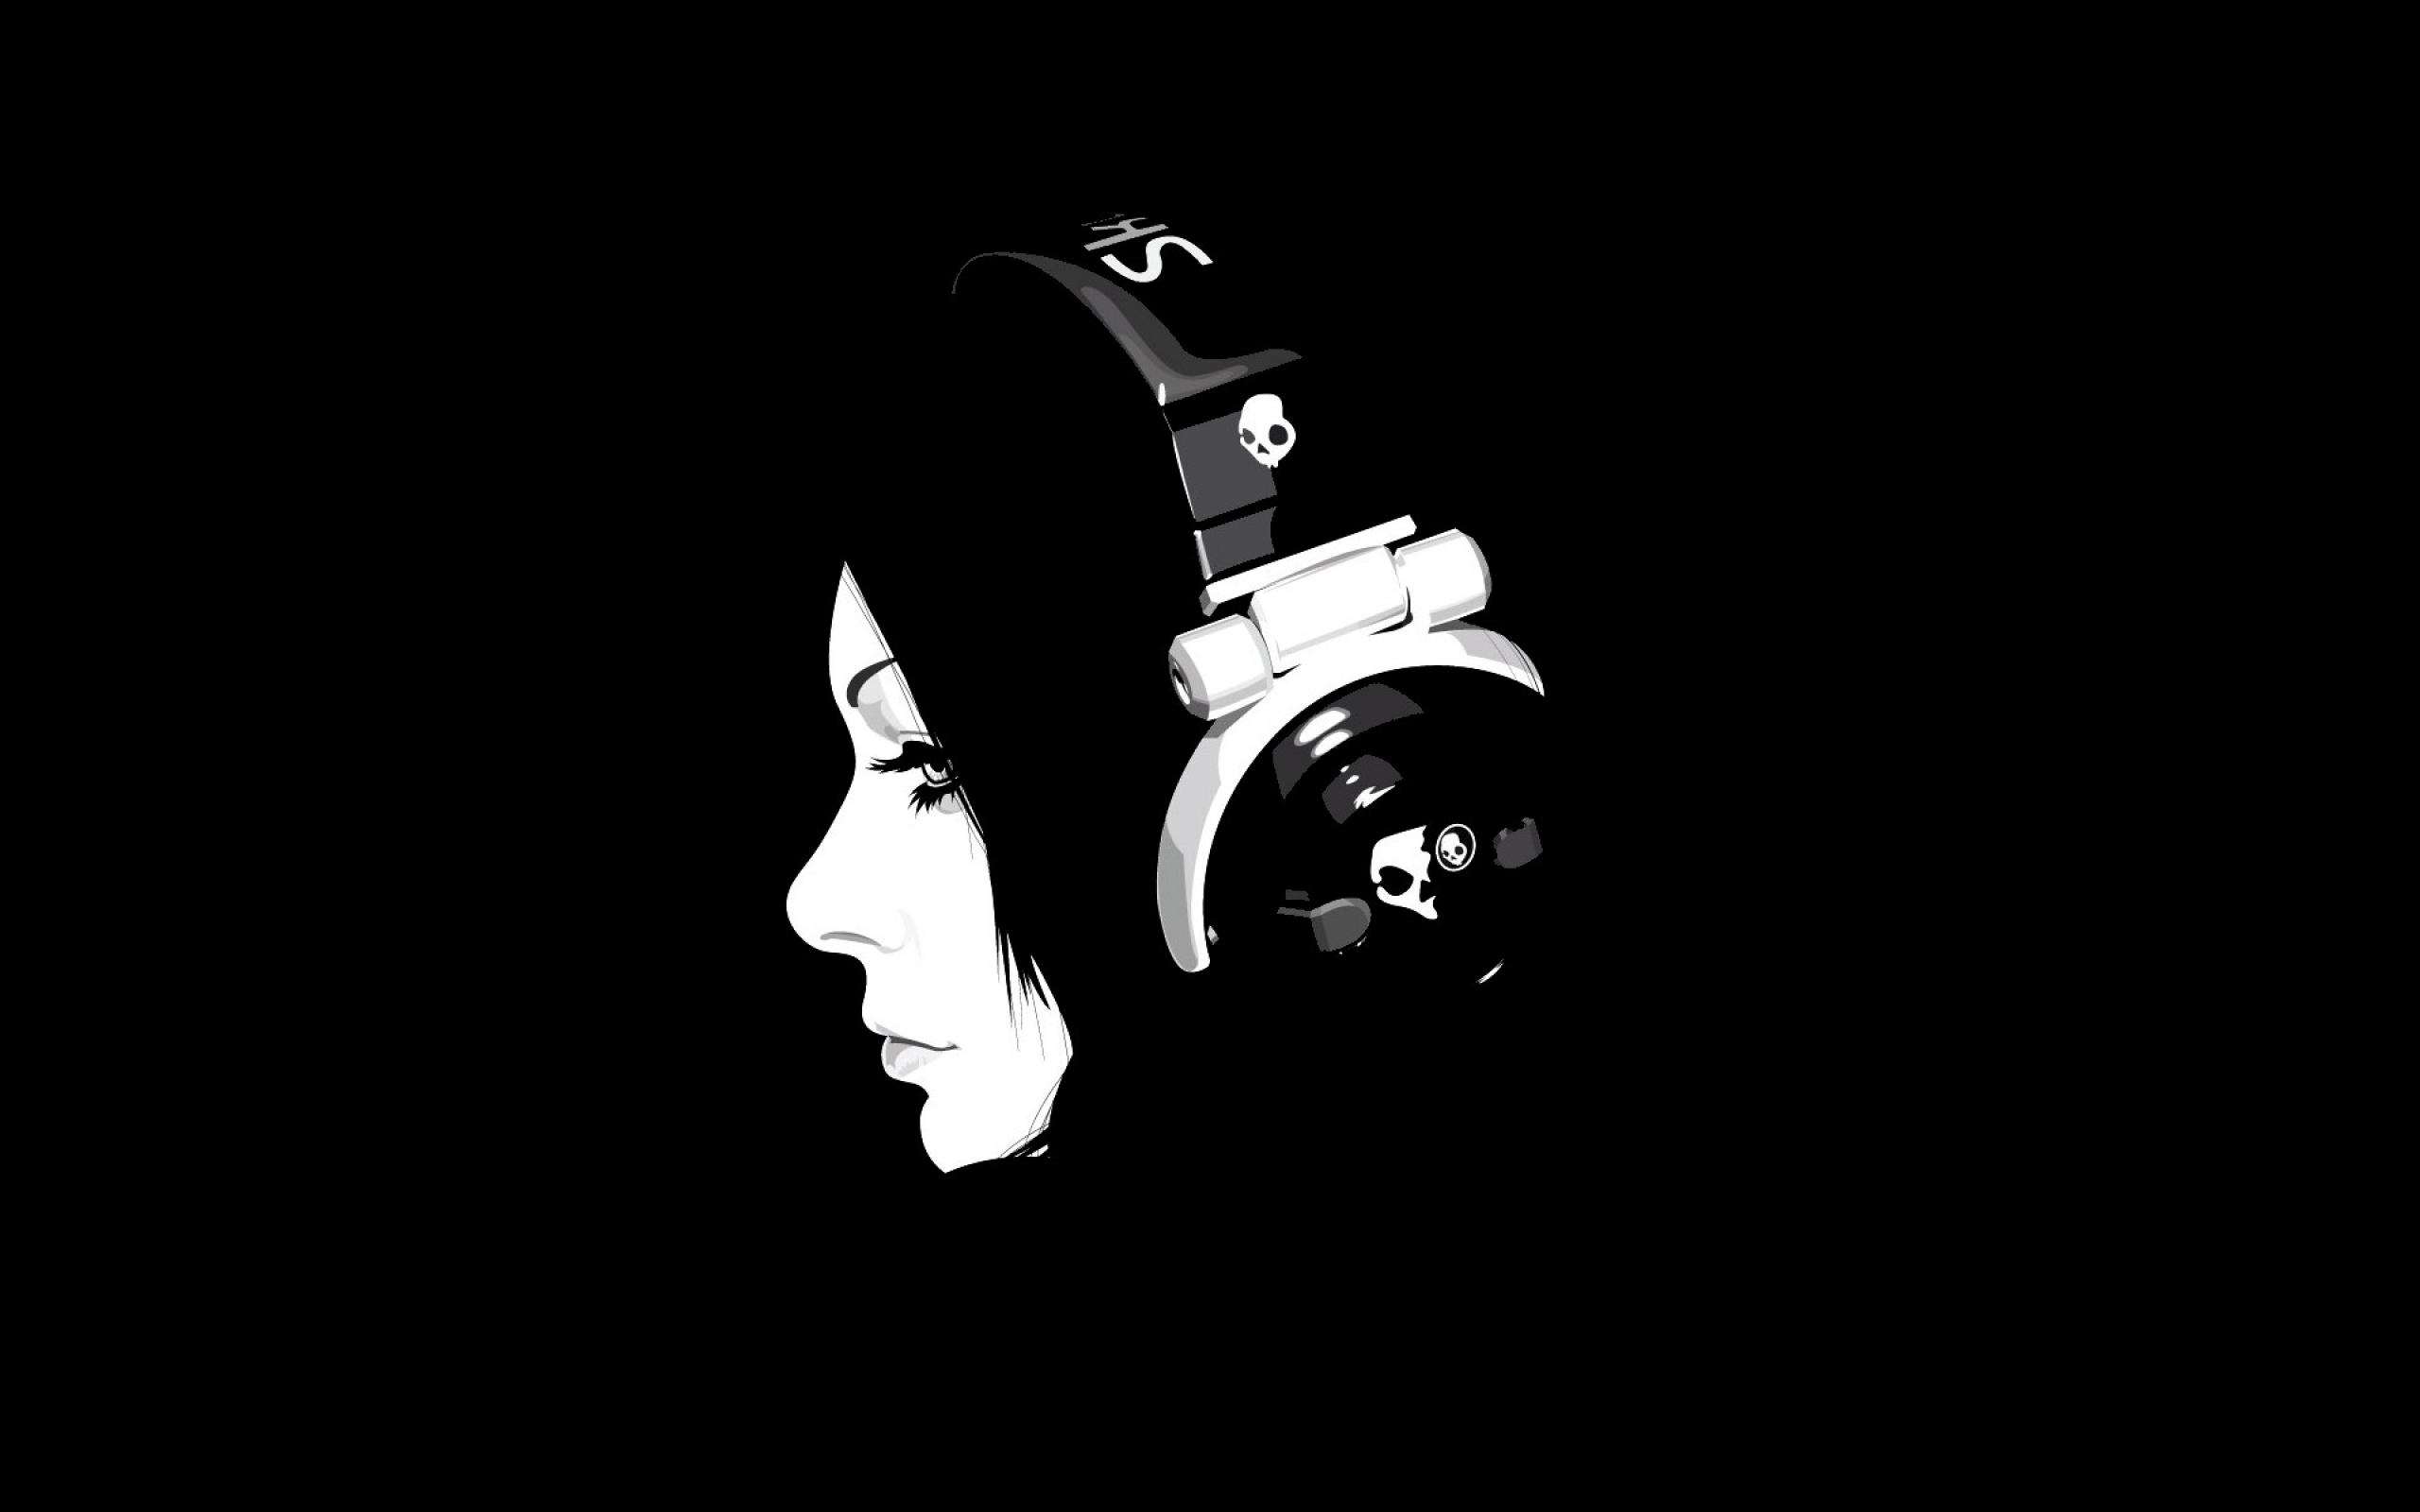 Skullcandy Headphones Girl Monochrome Zaaz Black Background